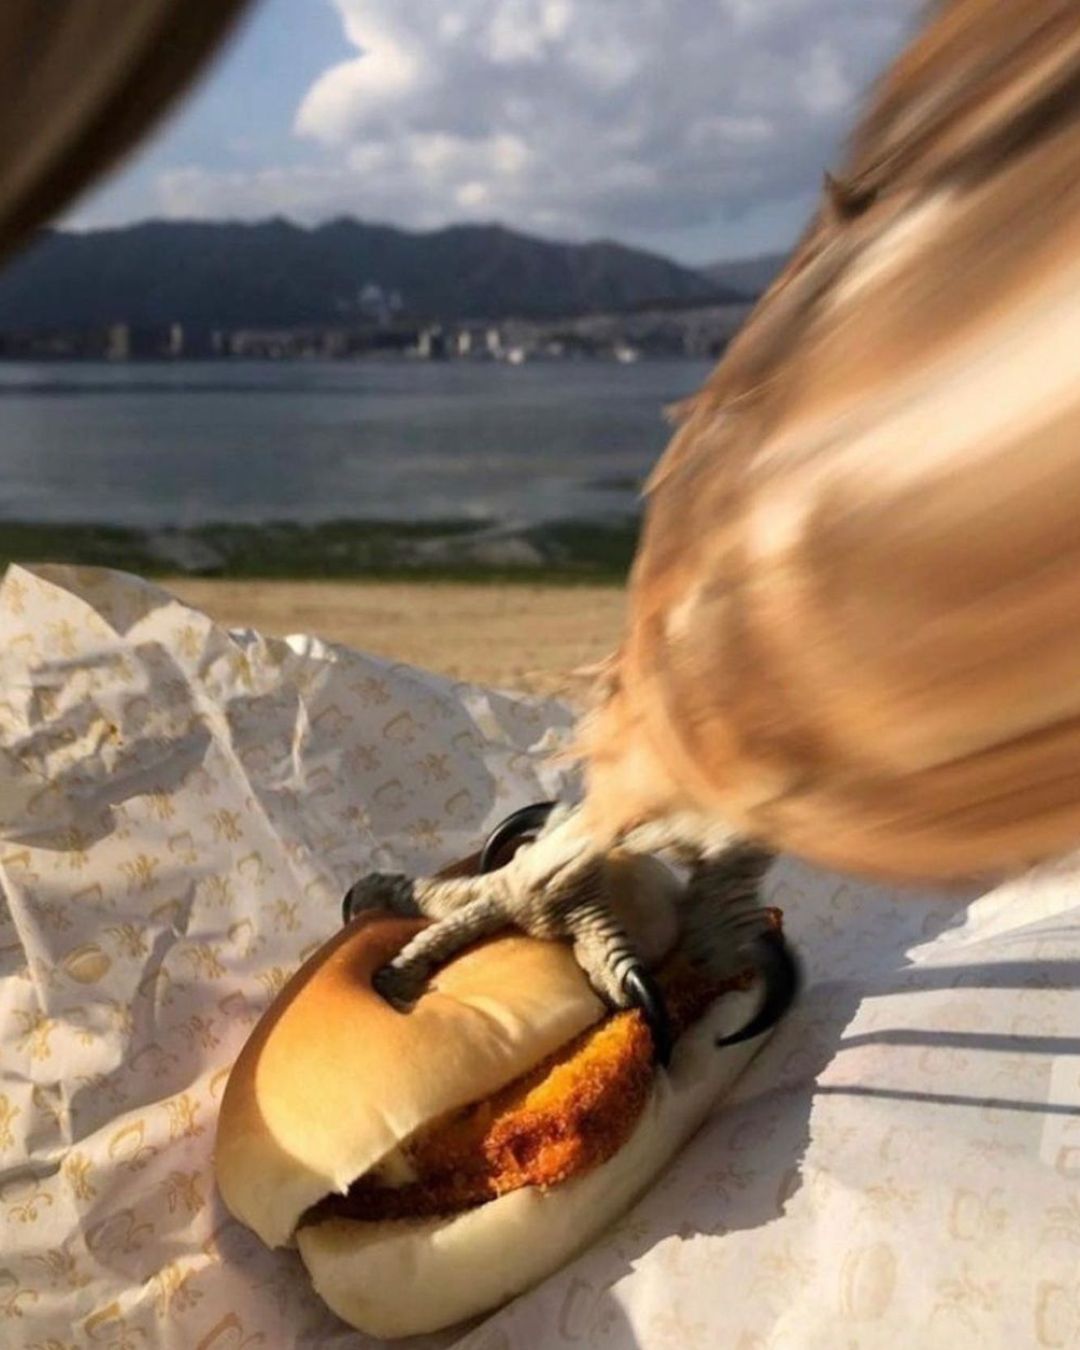 Eagle grabbing a burger